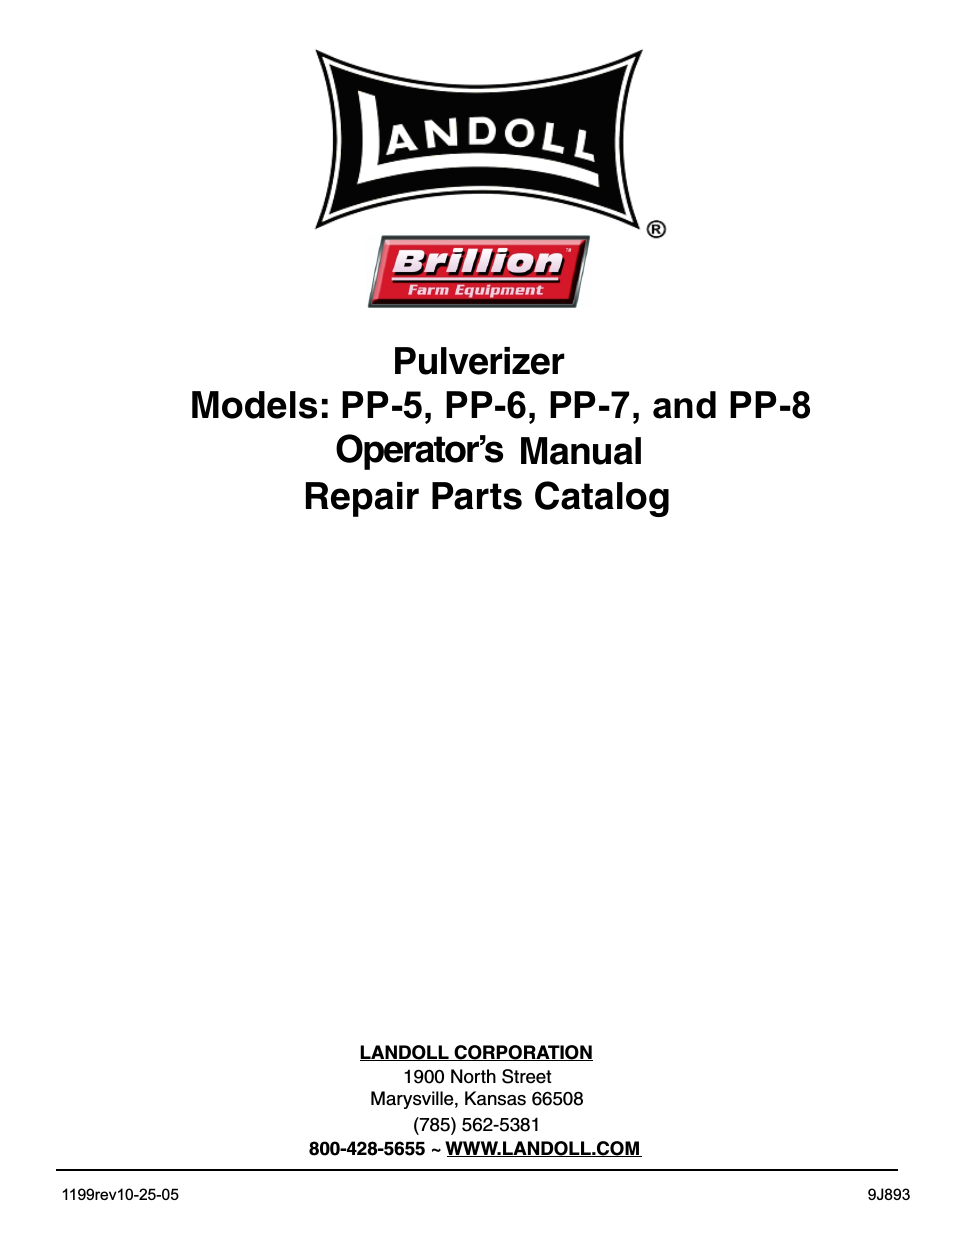 PP-8 Pulverizer